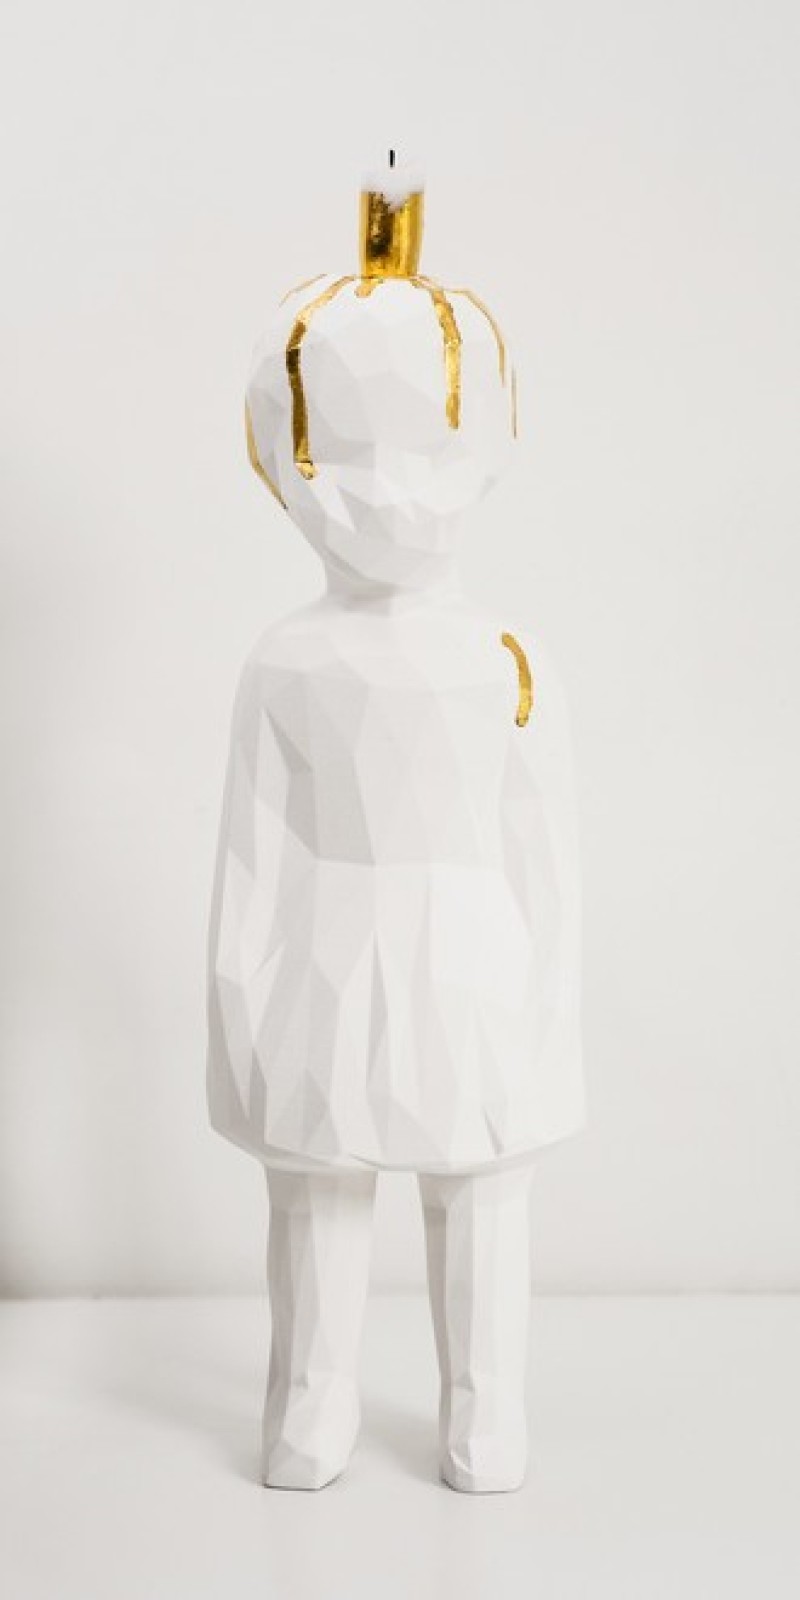 Mo Cornelisse - Big Doll - Golden idea